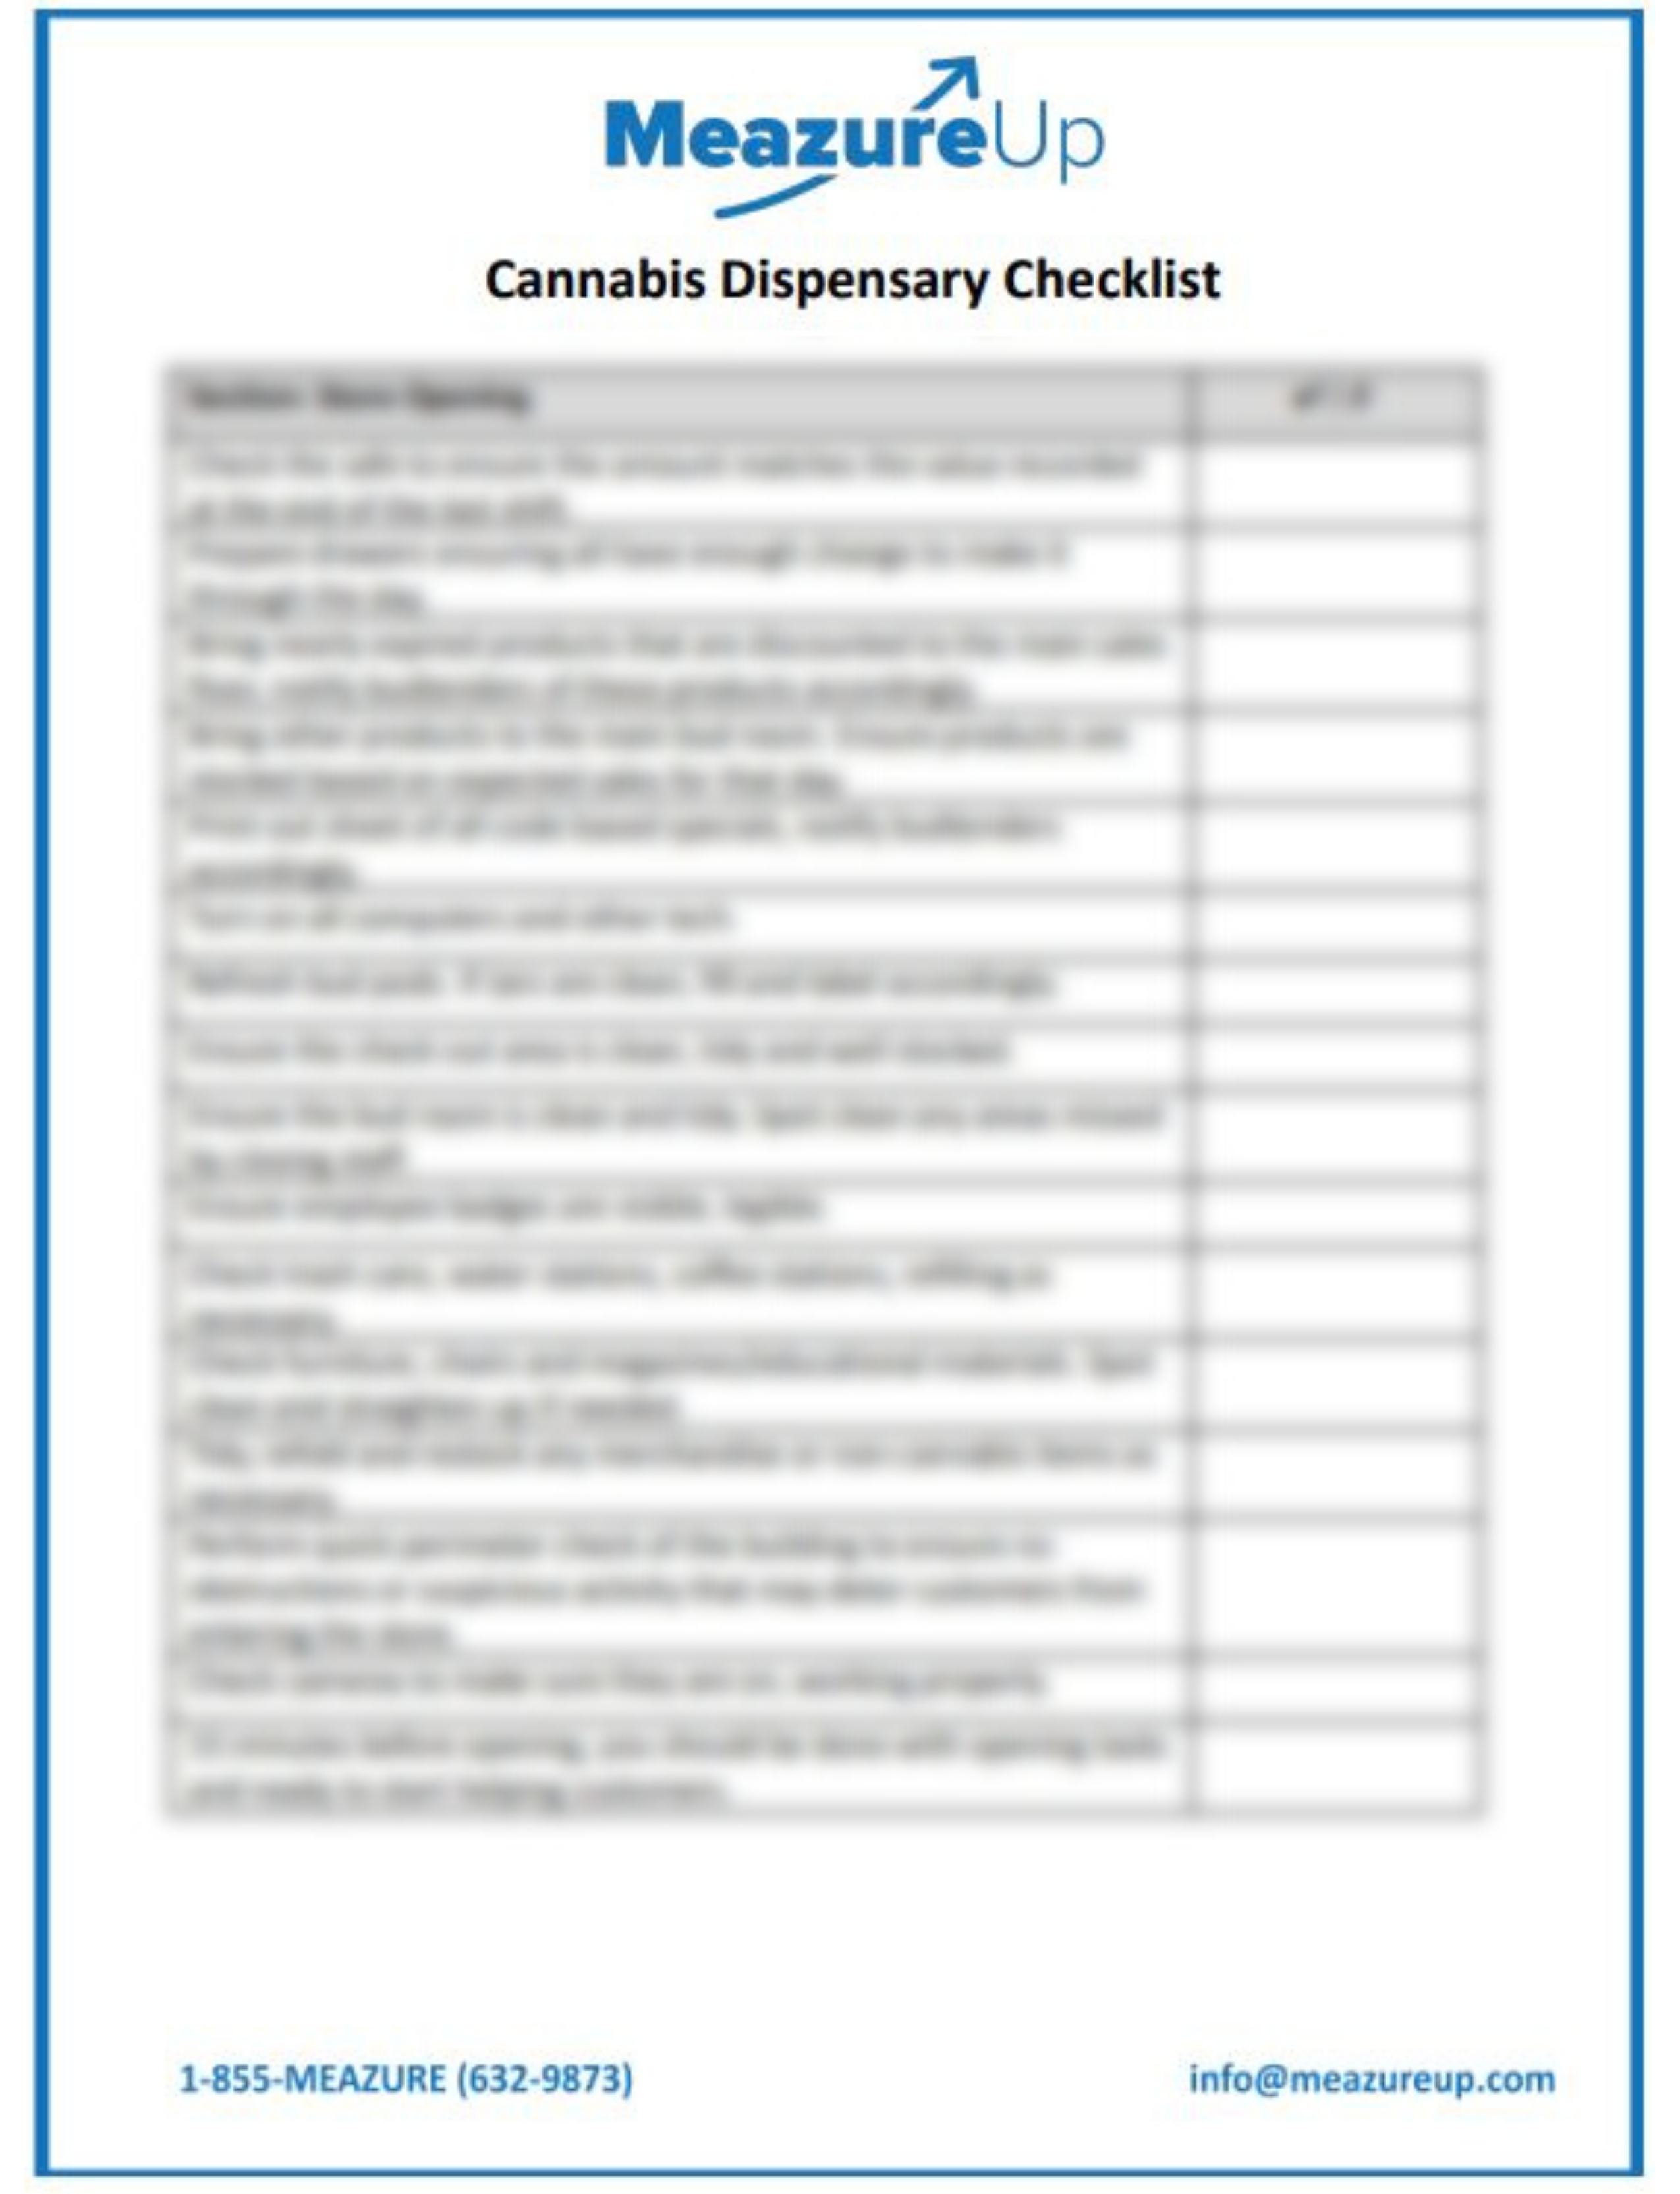 cannabis dispensary checklist blurred